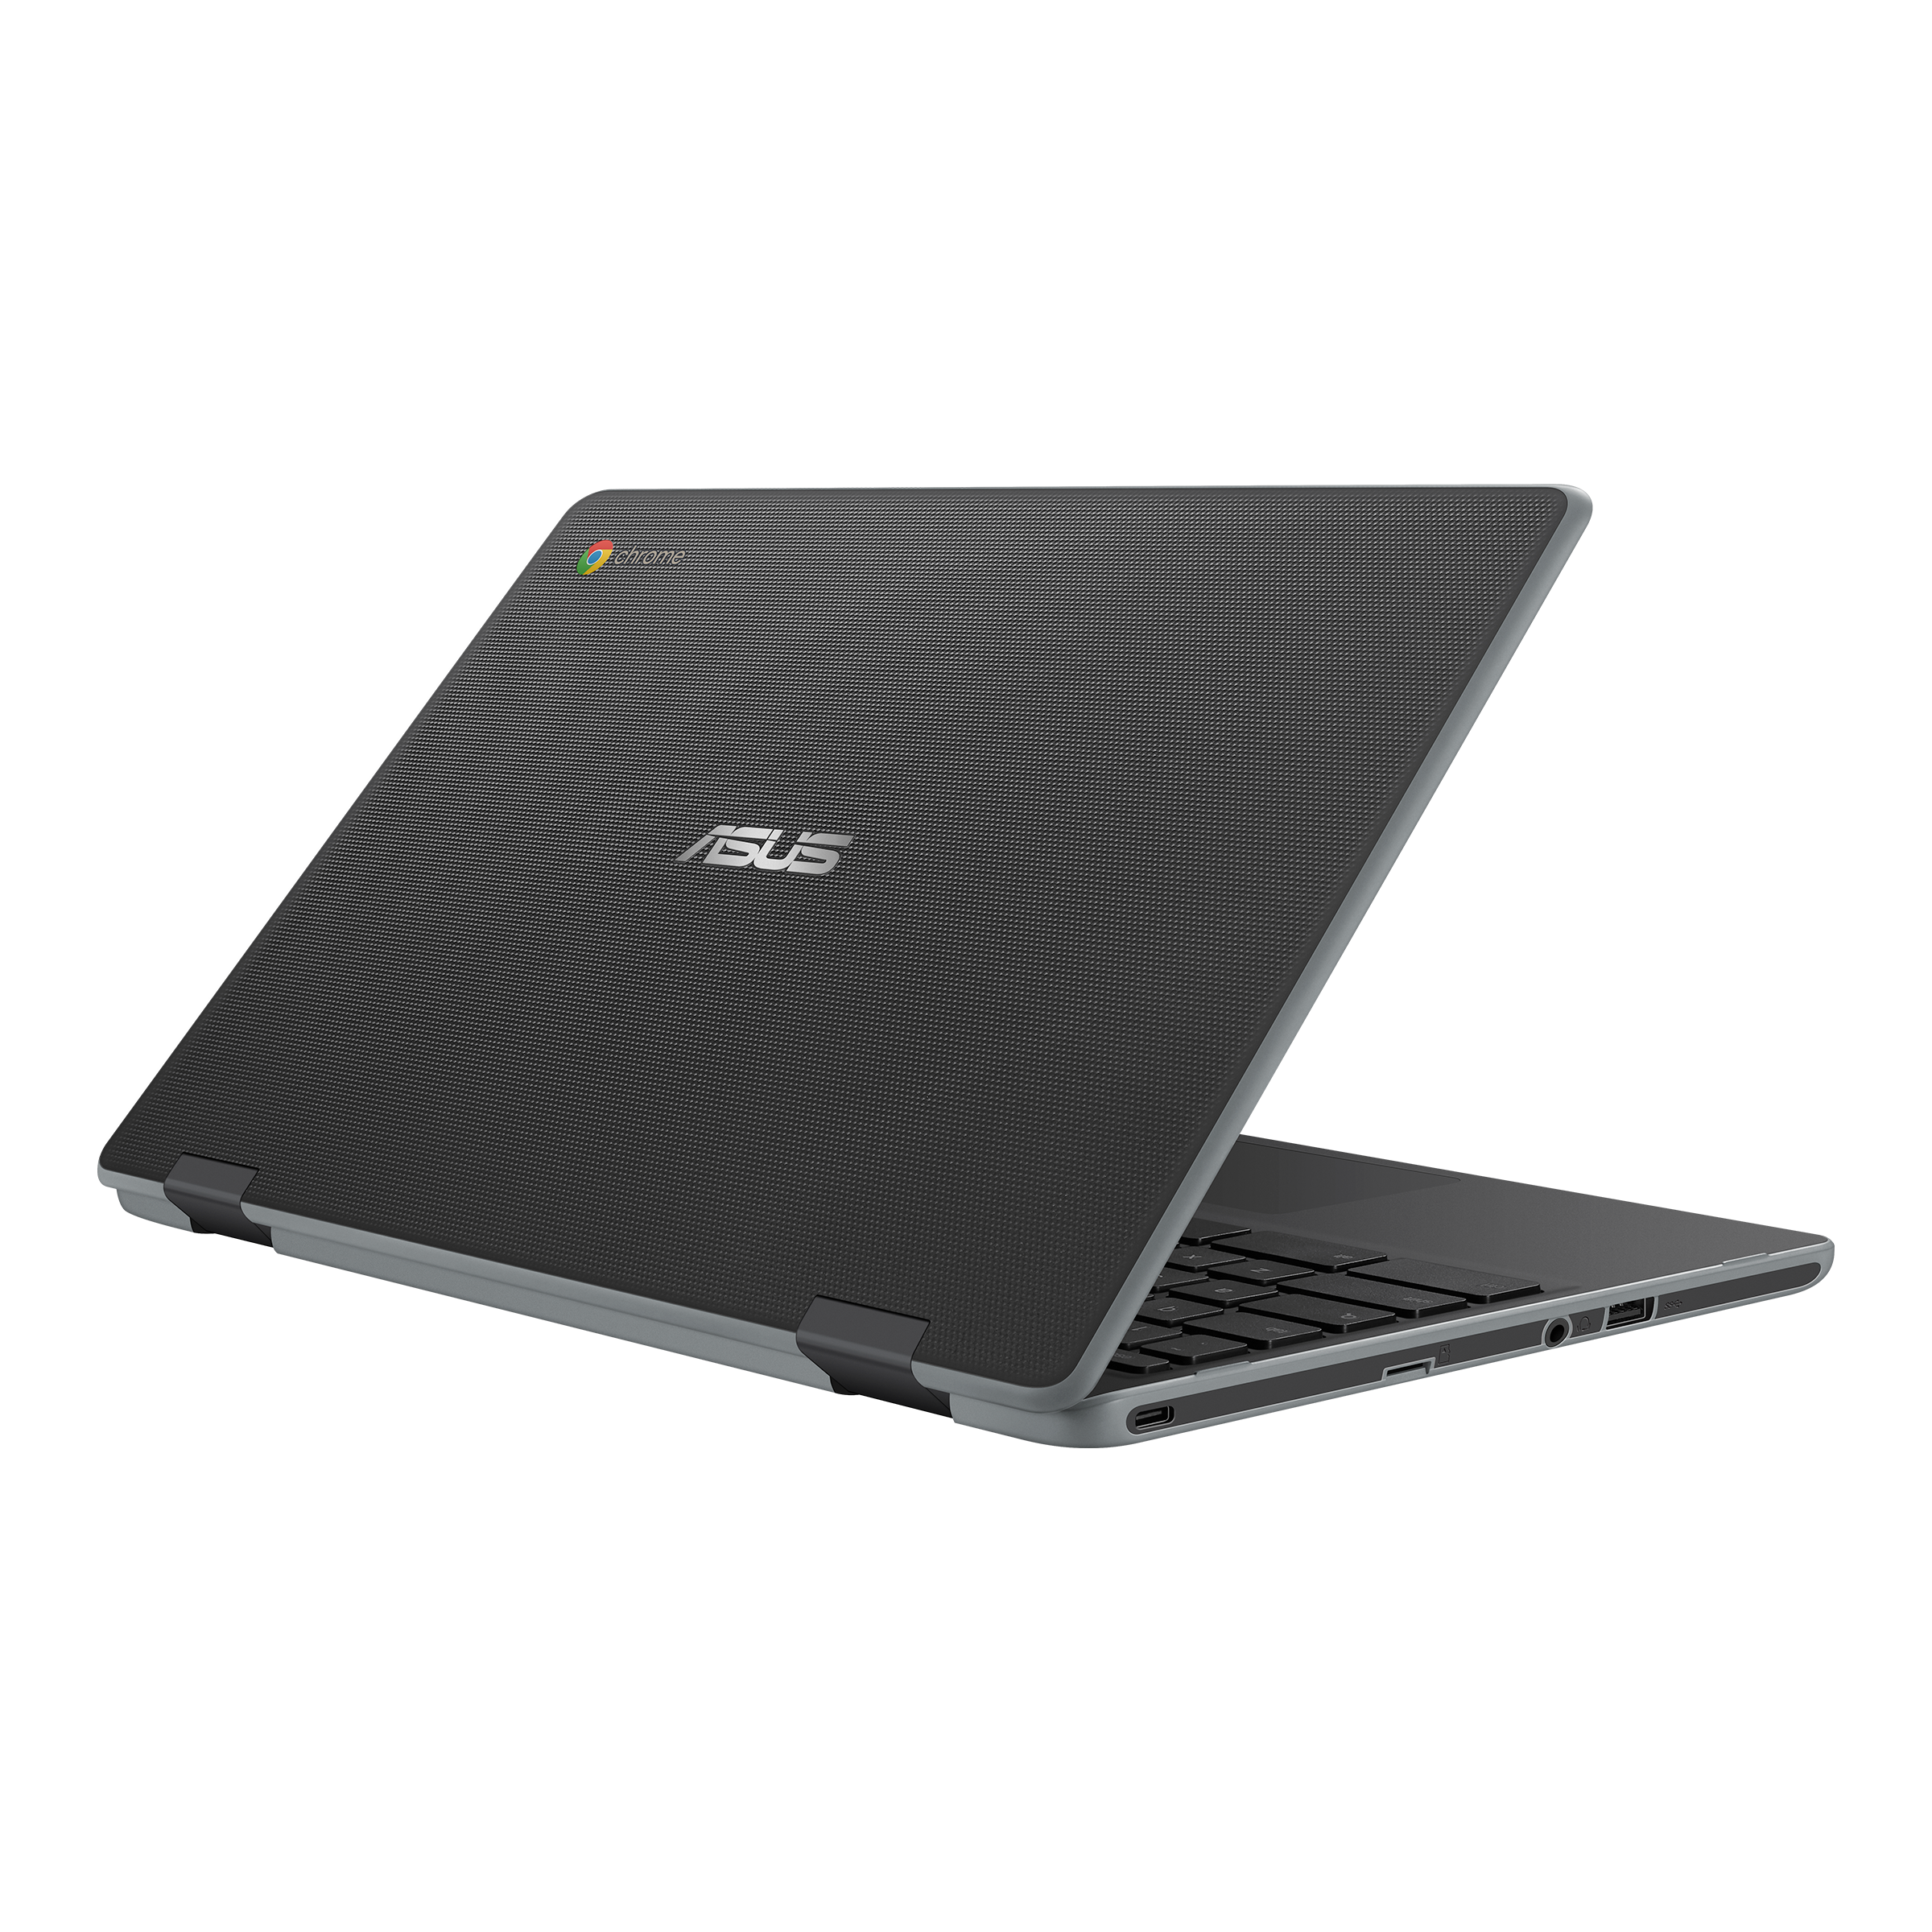 ASUS Chromebook C204｜Laptops For Home｜ASUS Global